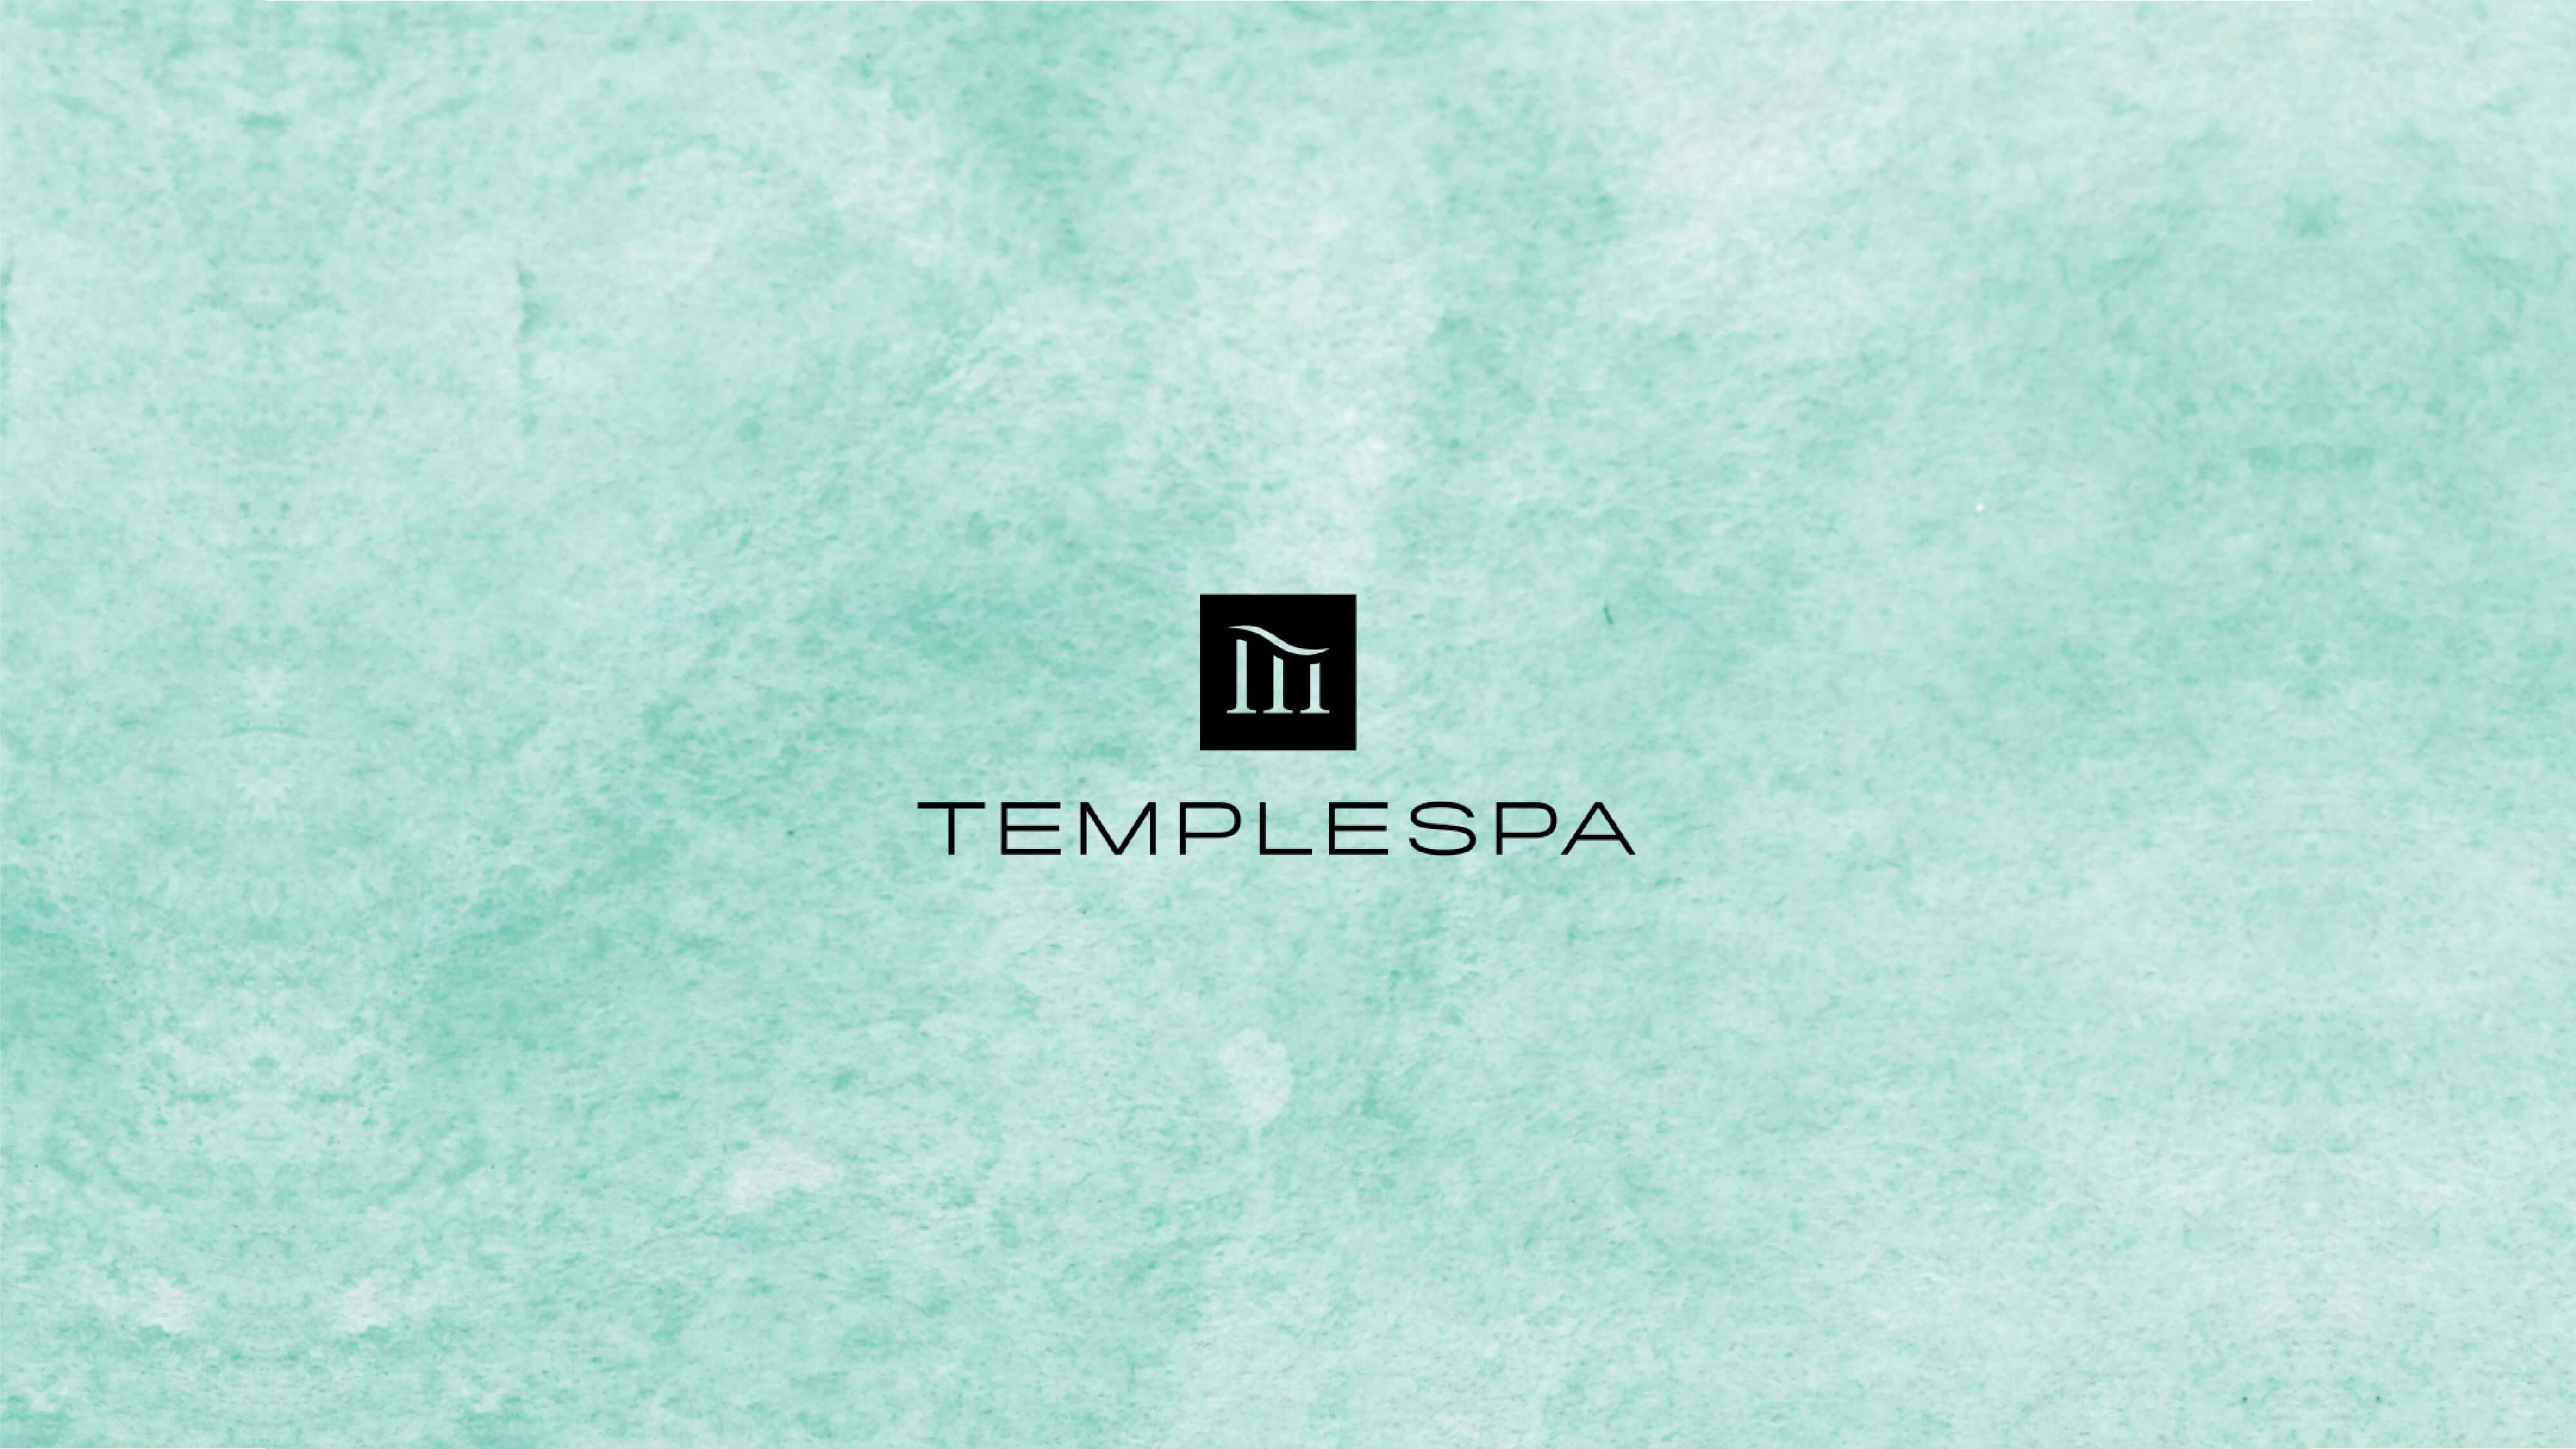 TEMPLESPA的飯店沐浴用品CORE RANGE系列，由Sunlife晨居飯店沐浴備品廠商供應